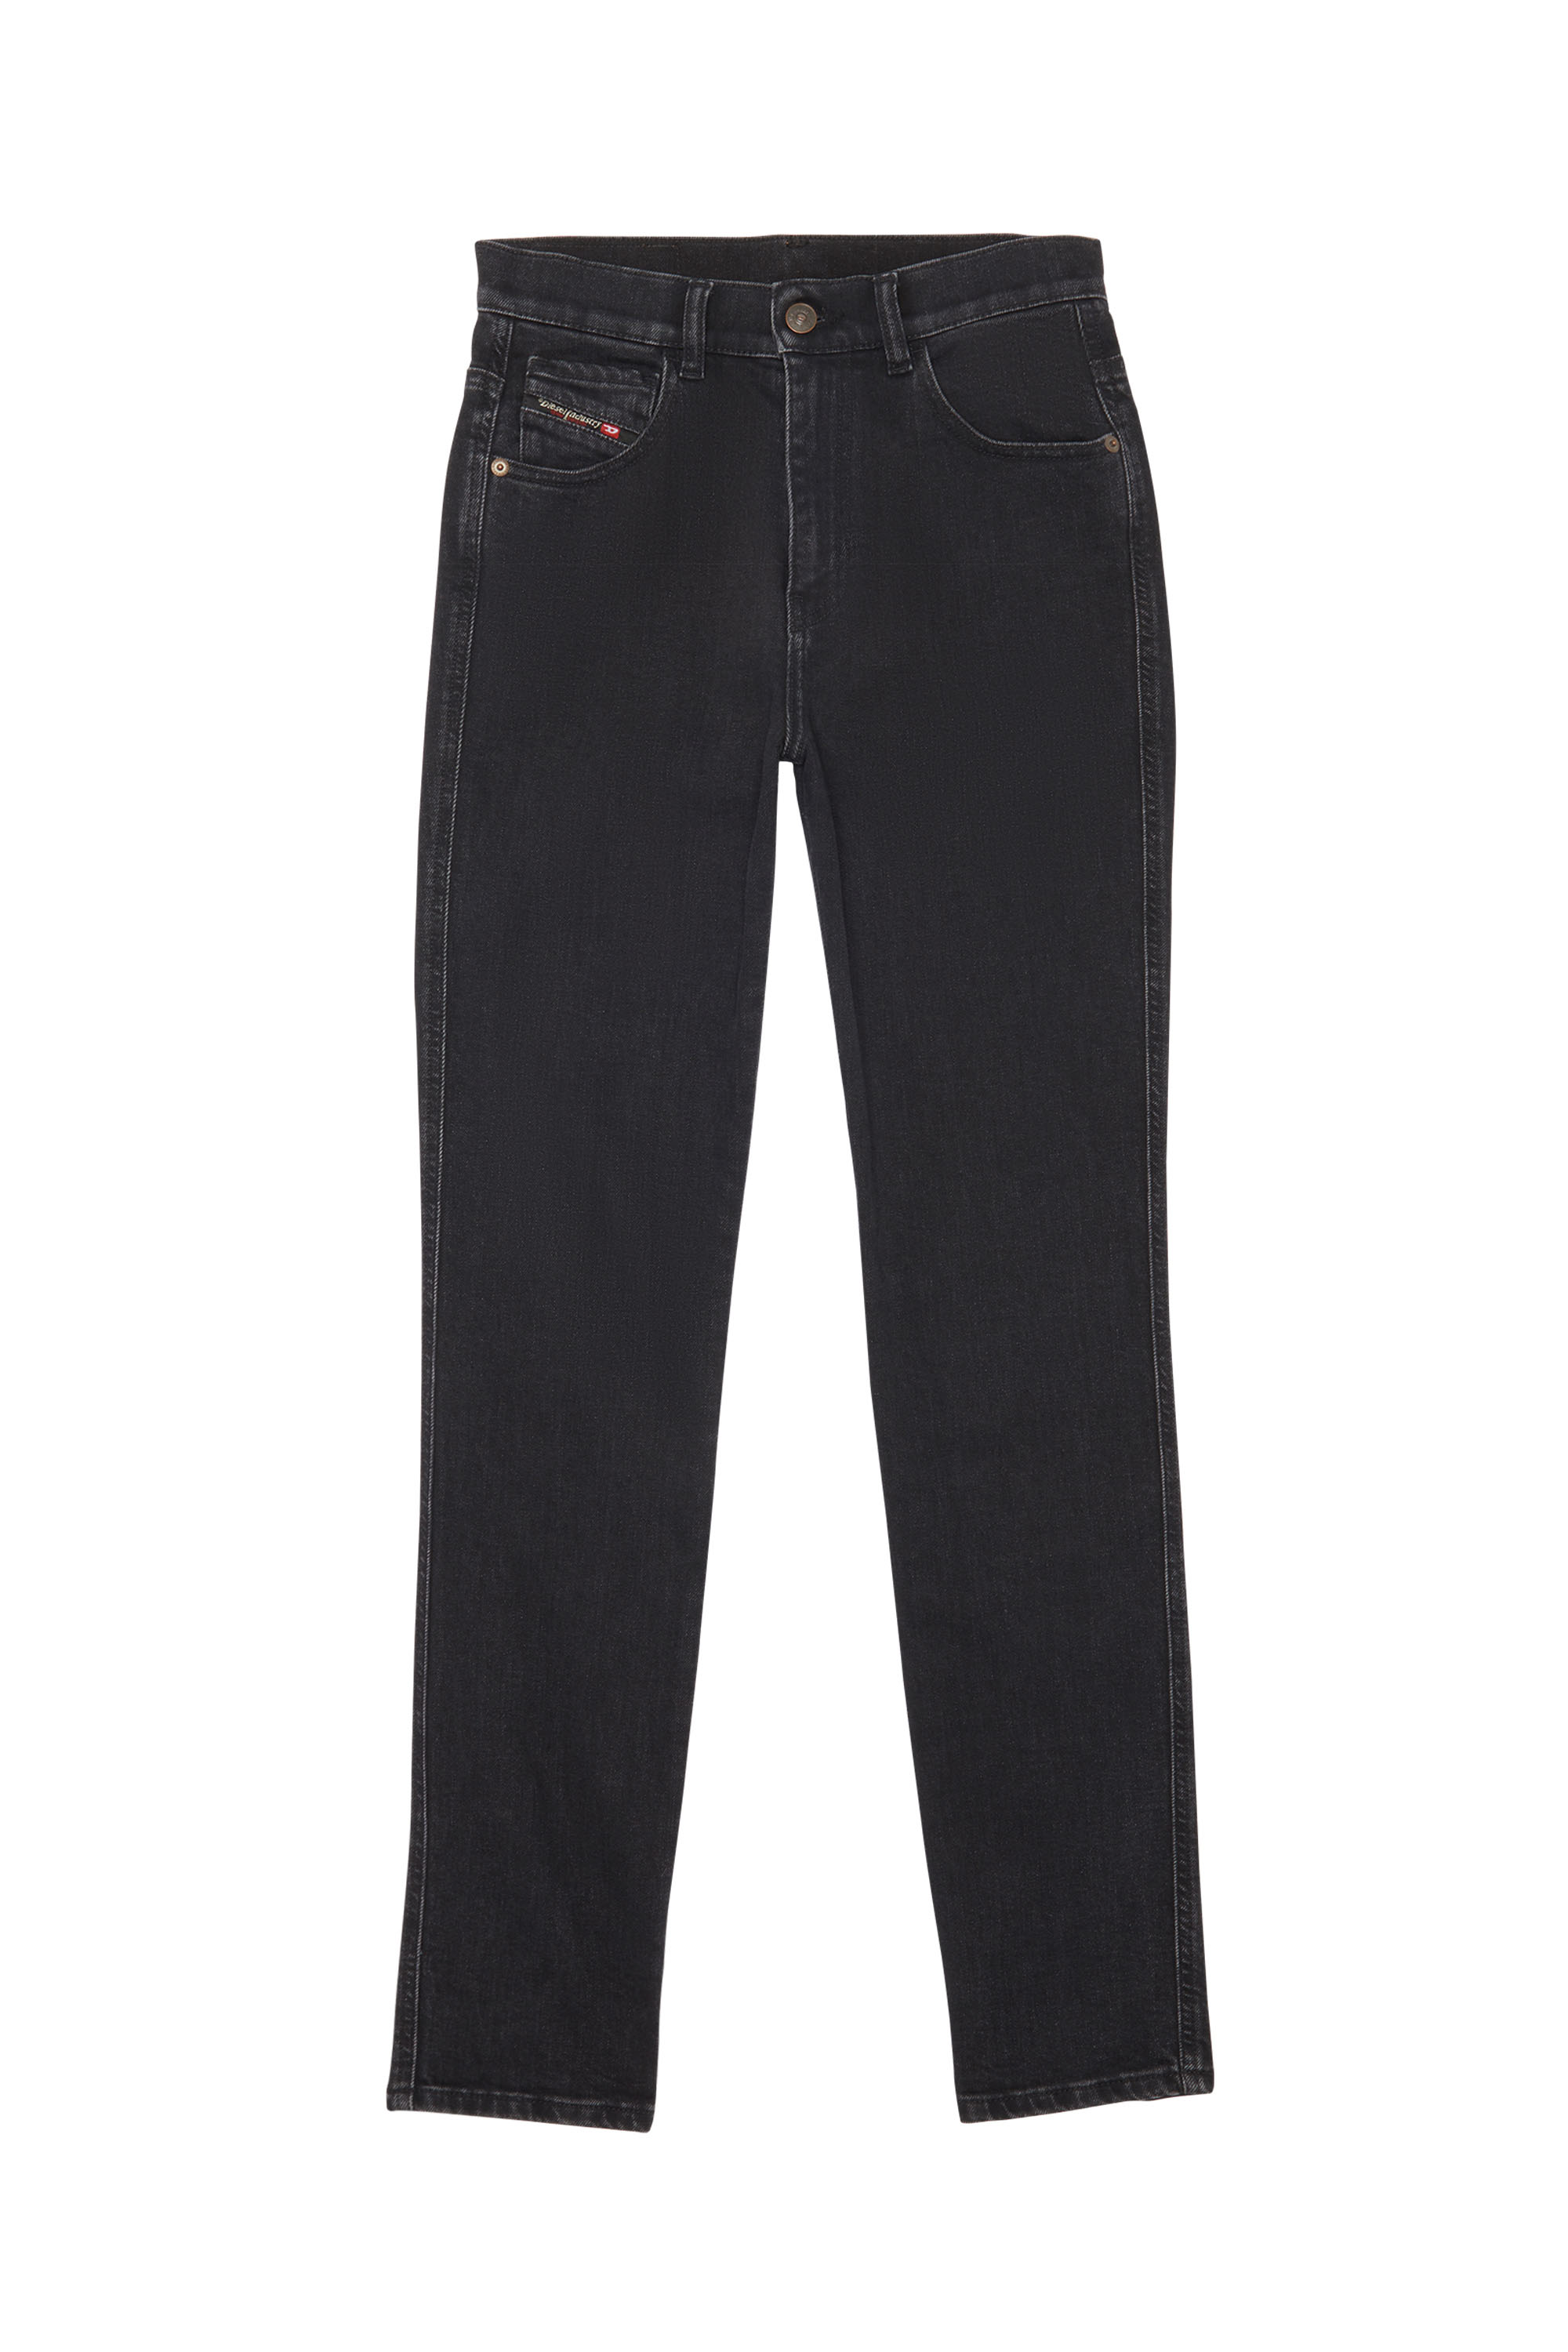 1994 Z9C25 Straight Jeans, Black/Dark grey - Jeans